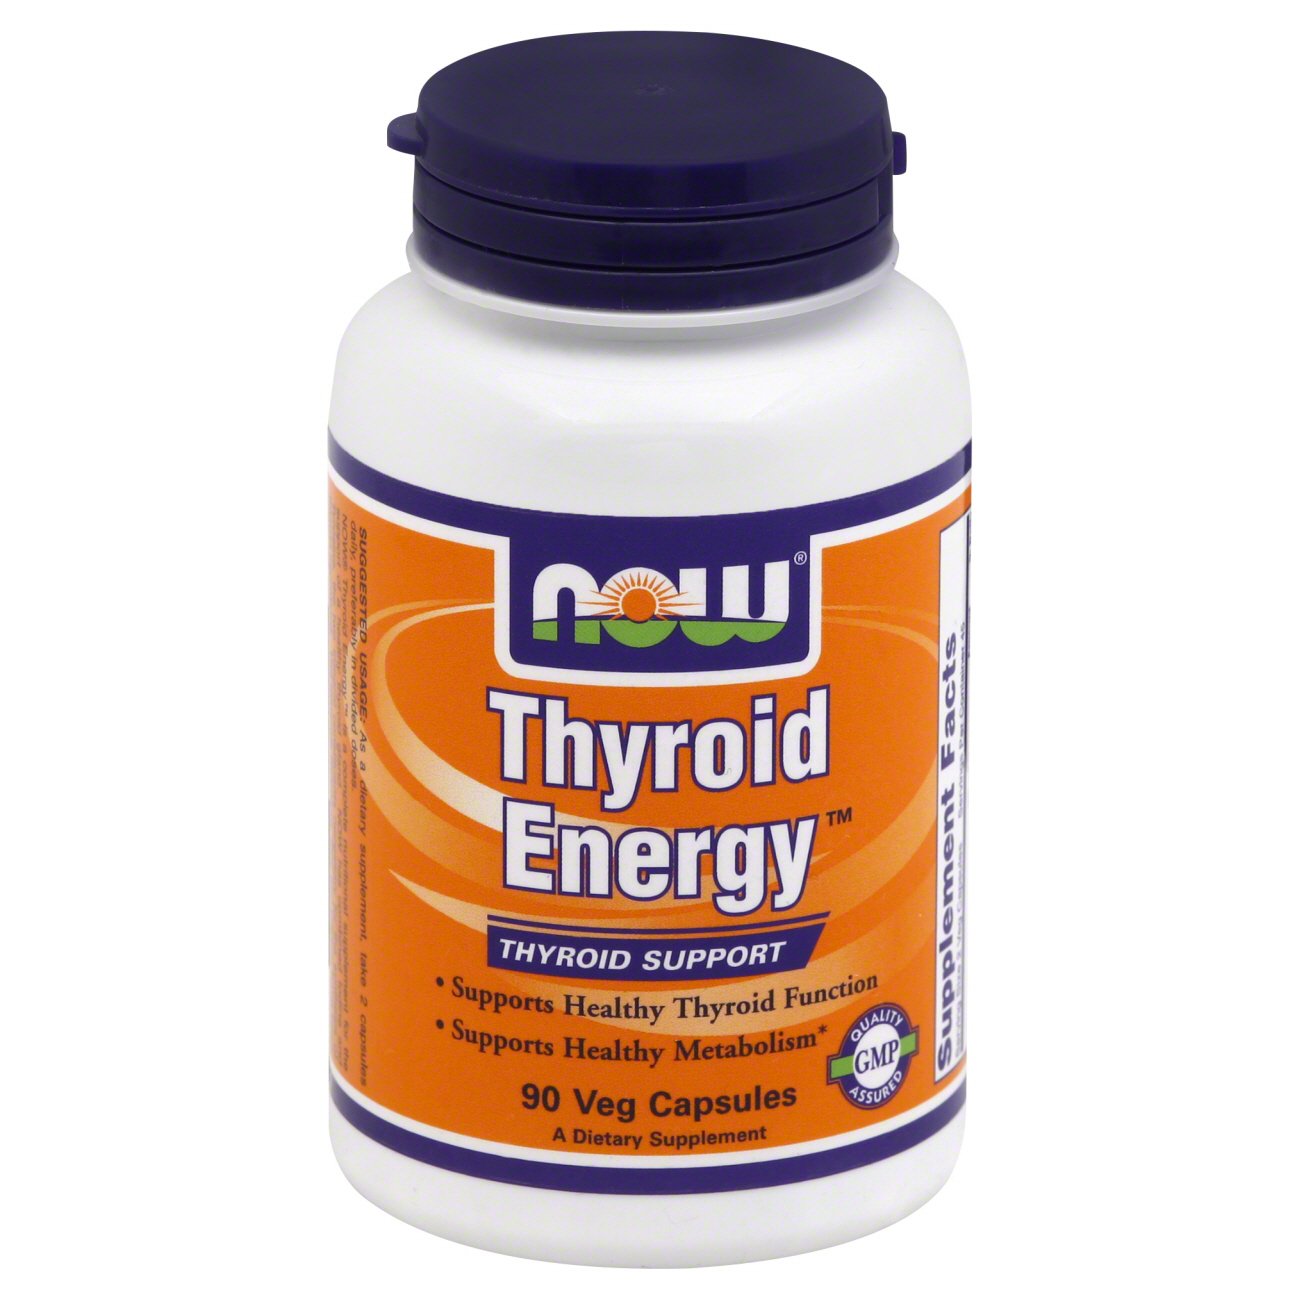 now thyroid energy